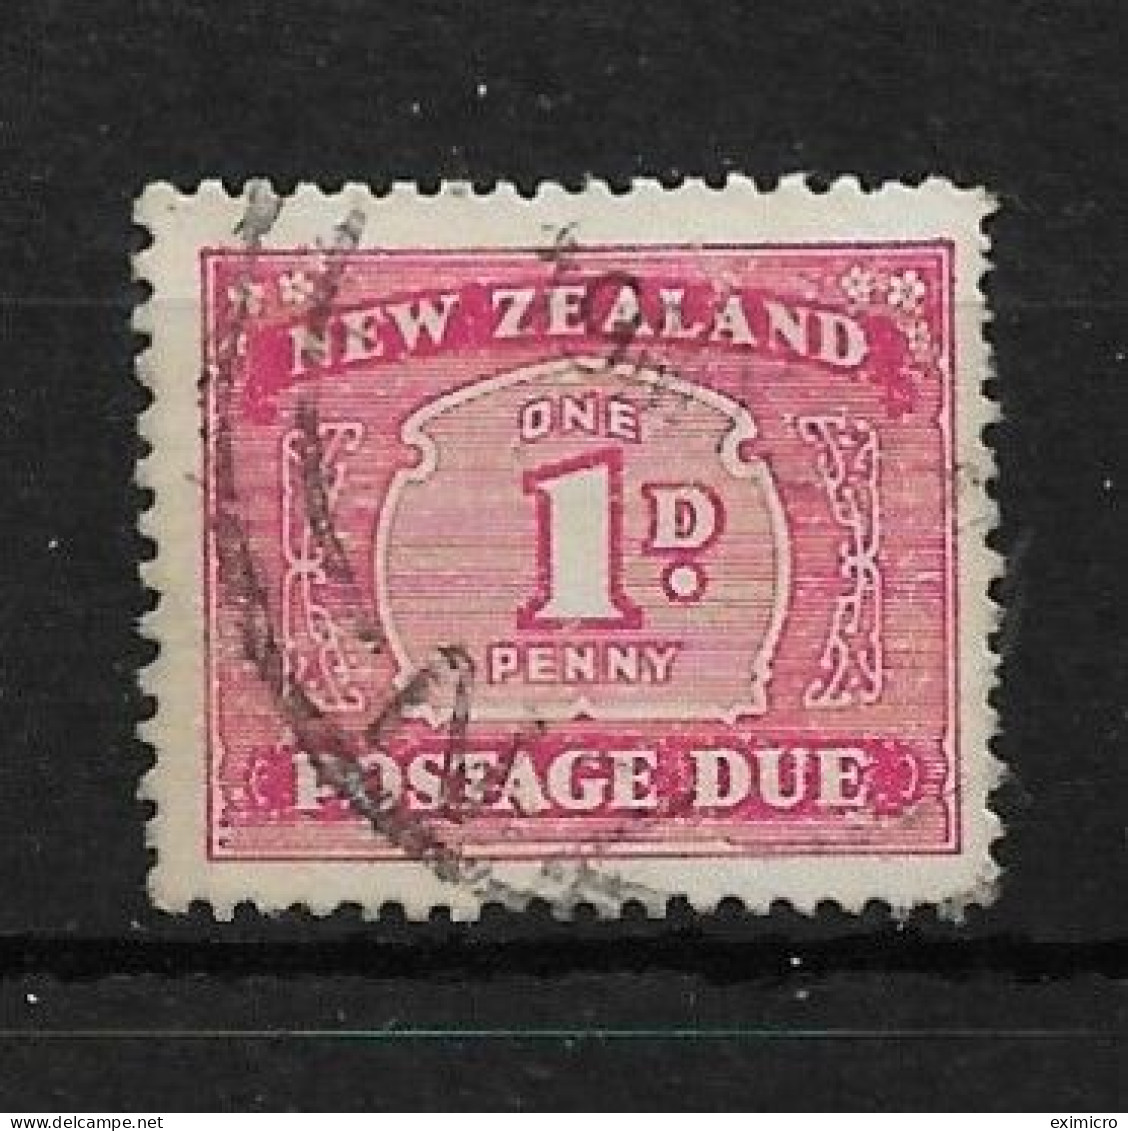 NEW ZEALAND 1939 1d POSTAGE DUE SG D42 FINE USED Cat £2.50 - Segnatasse